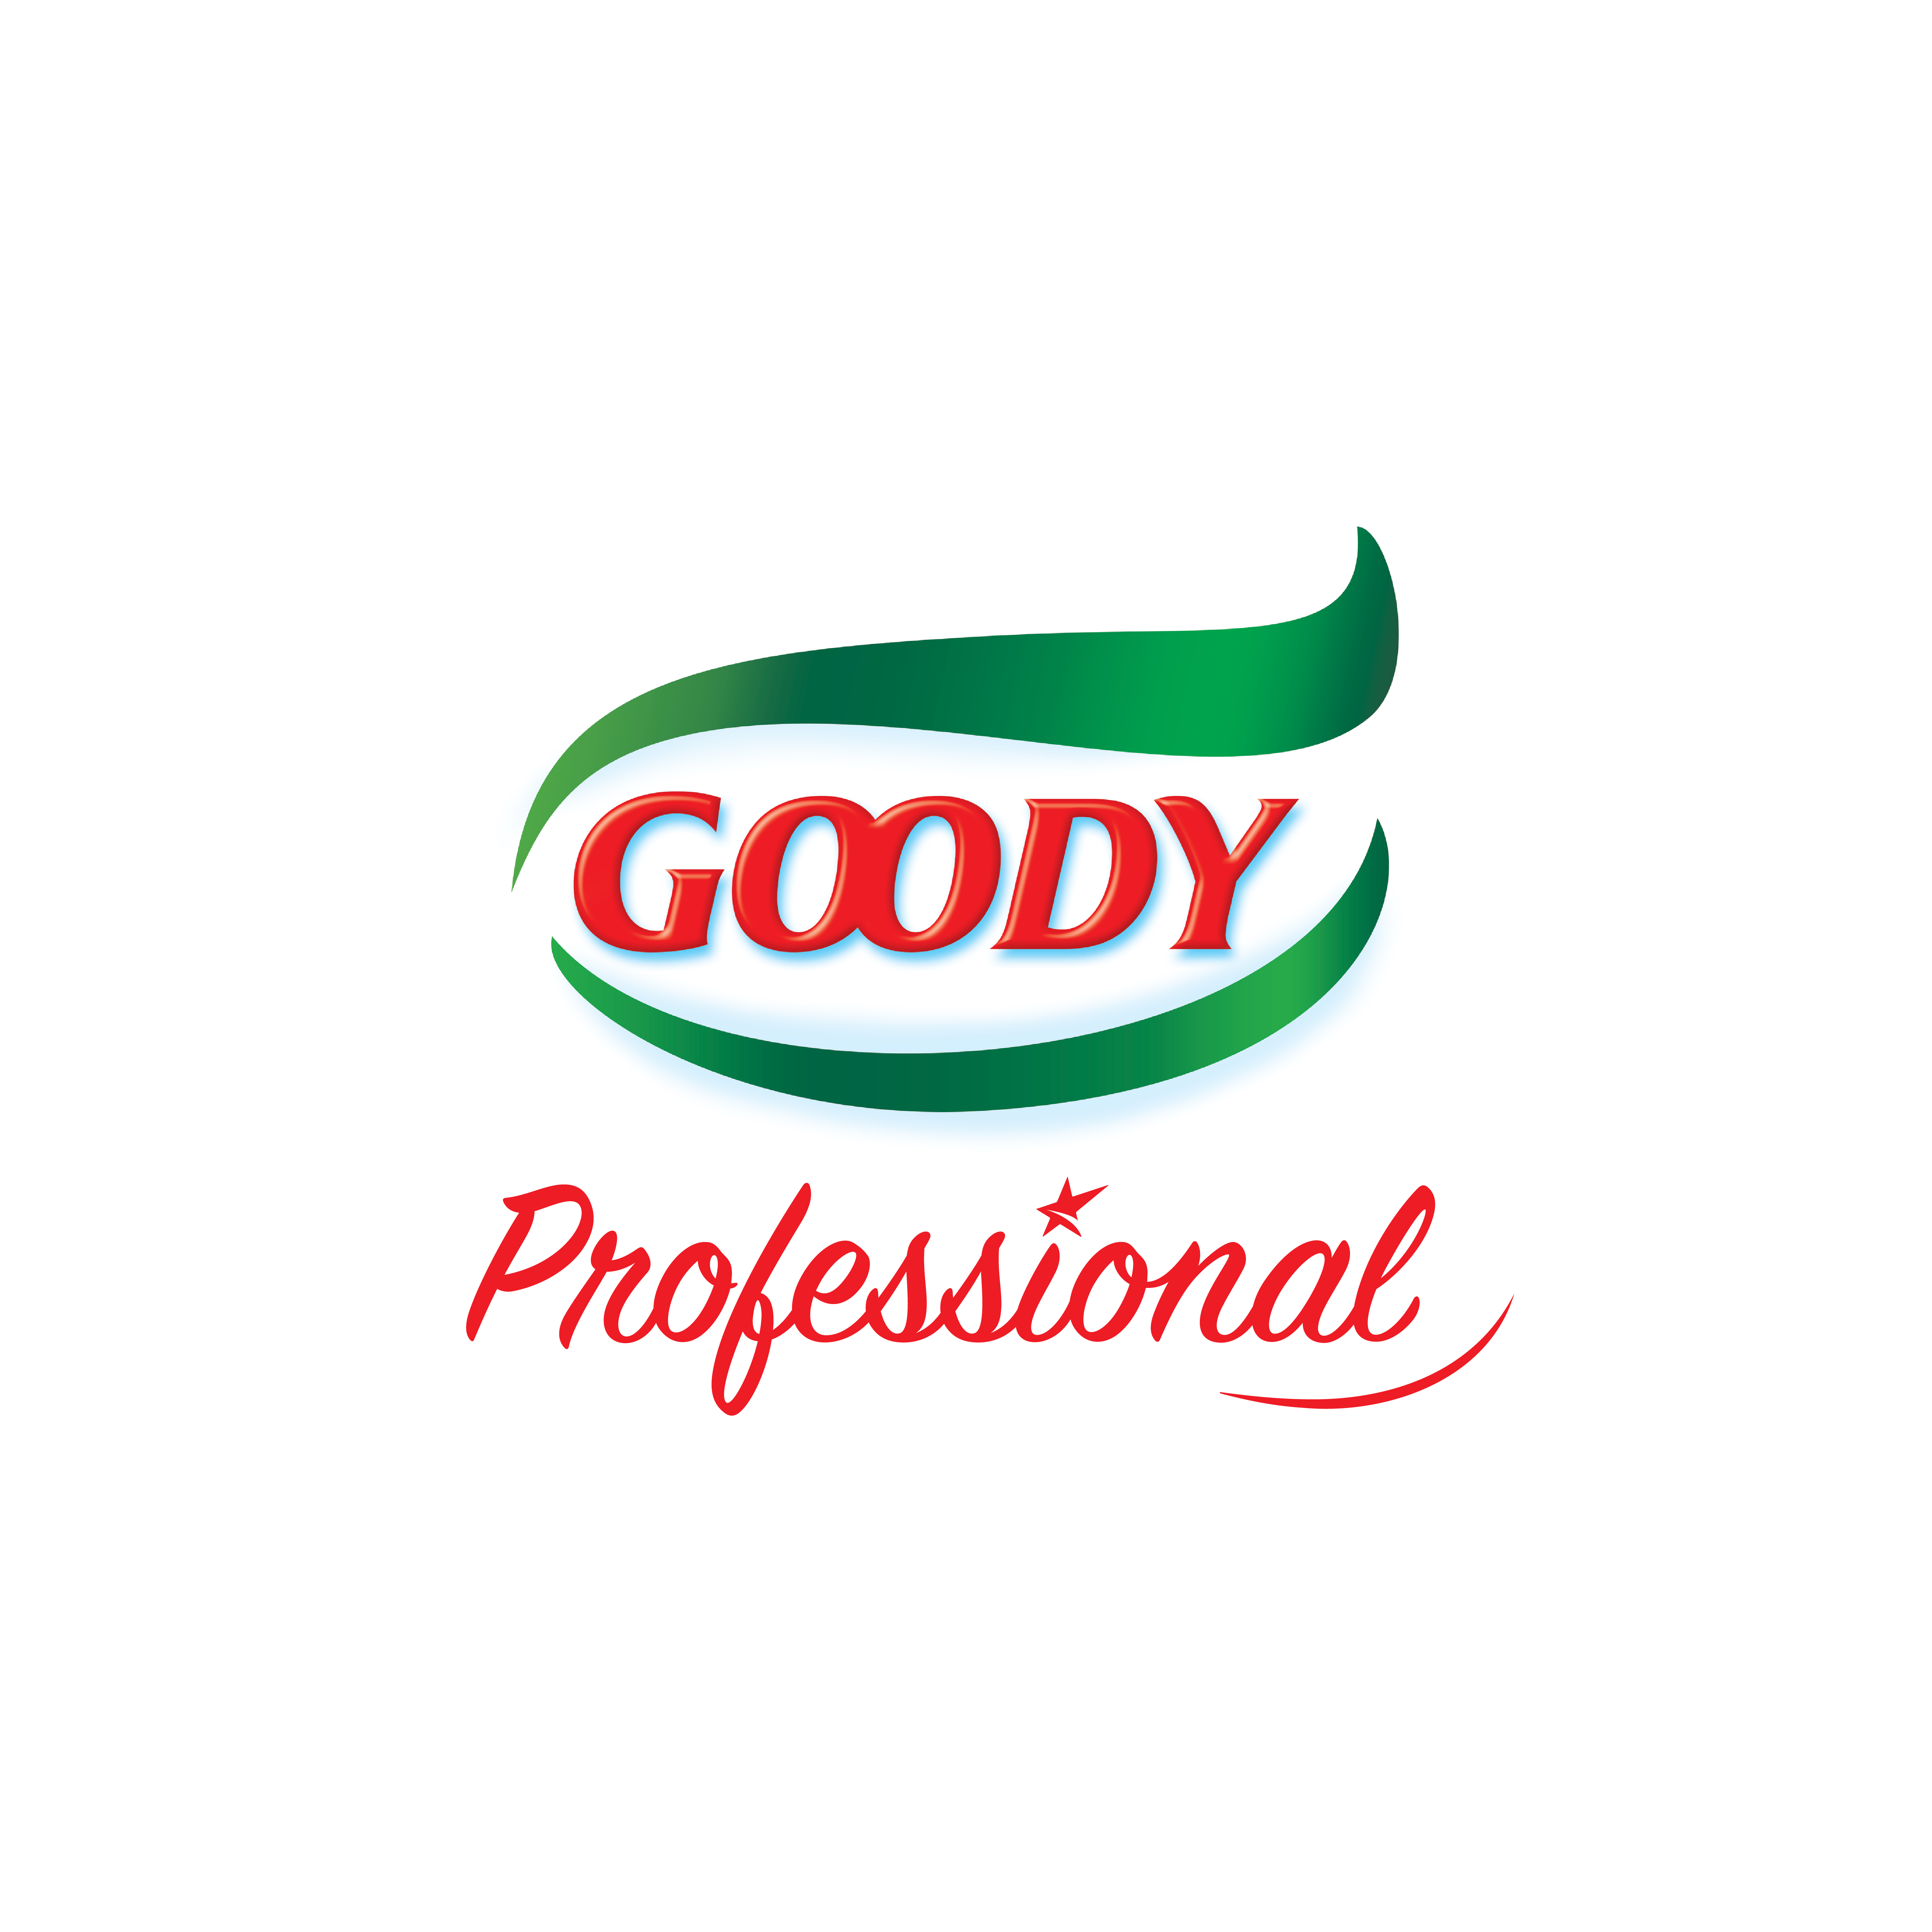 Goody Professional